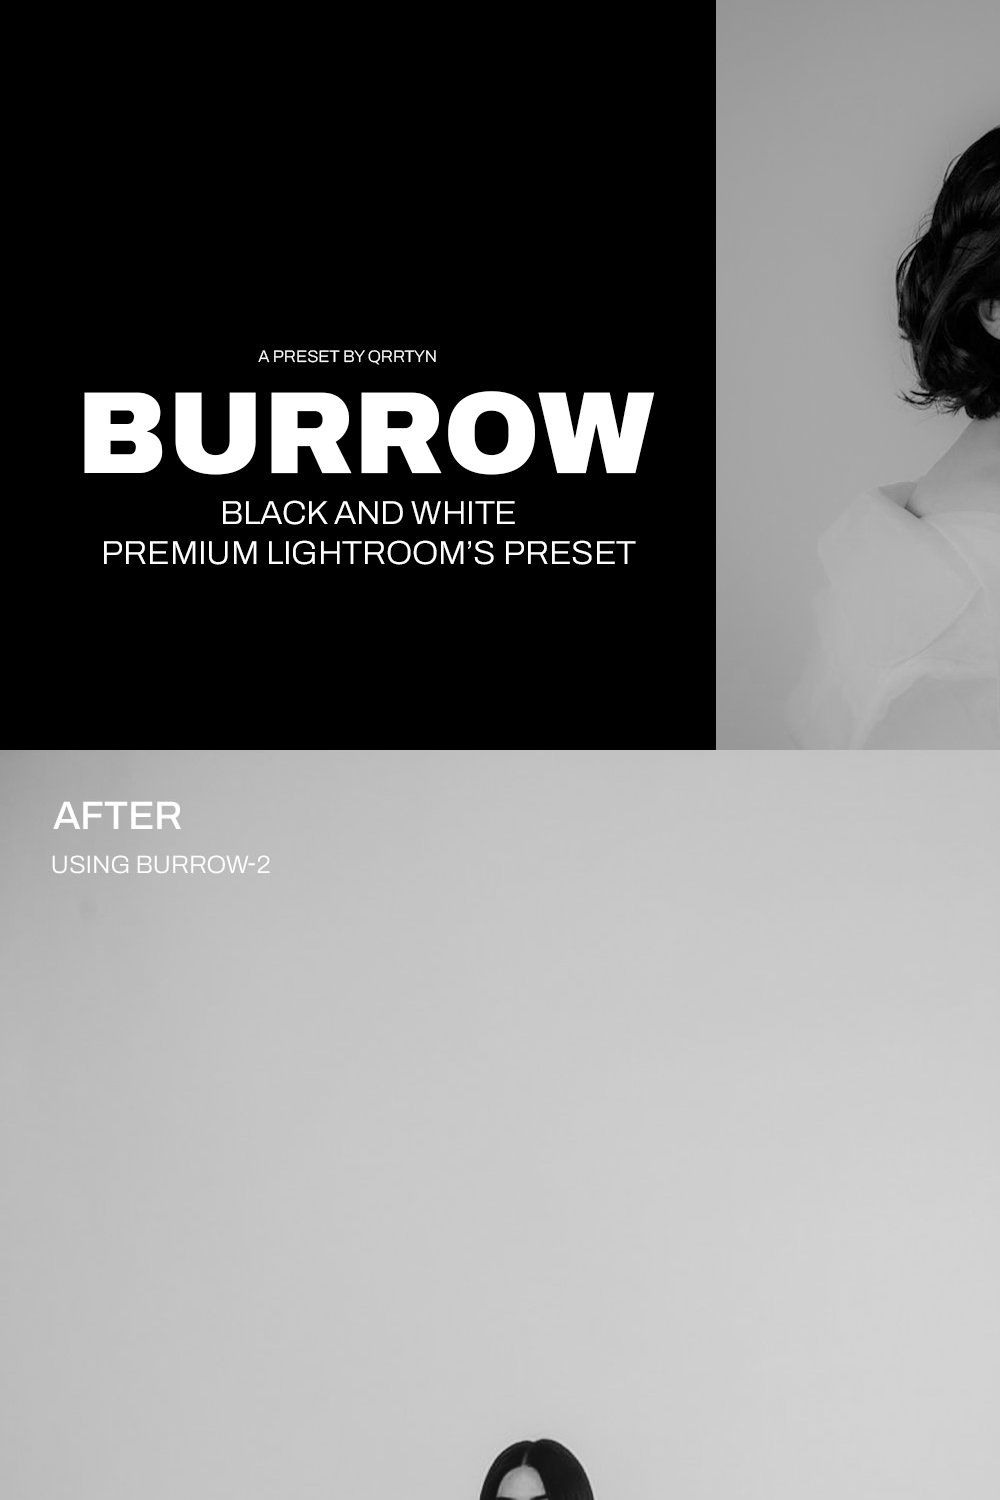 Burrow Lightroom's Presets pinterest preview image.